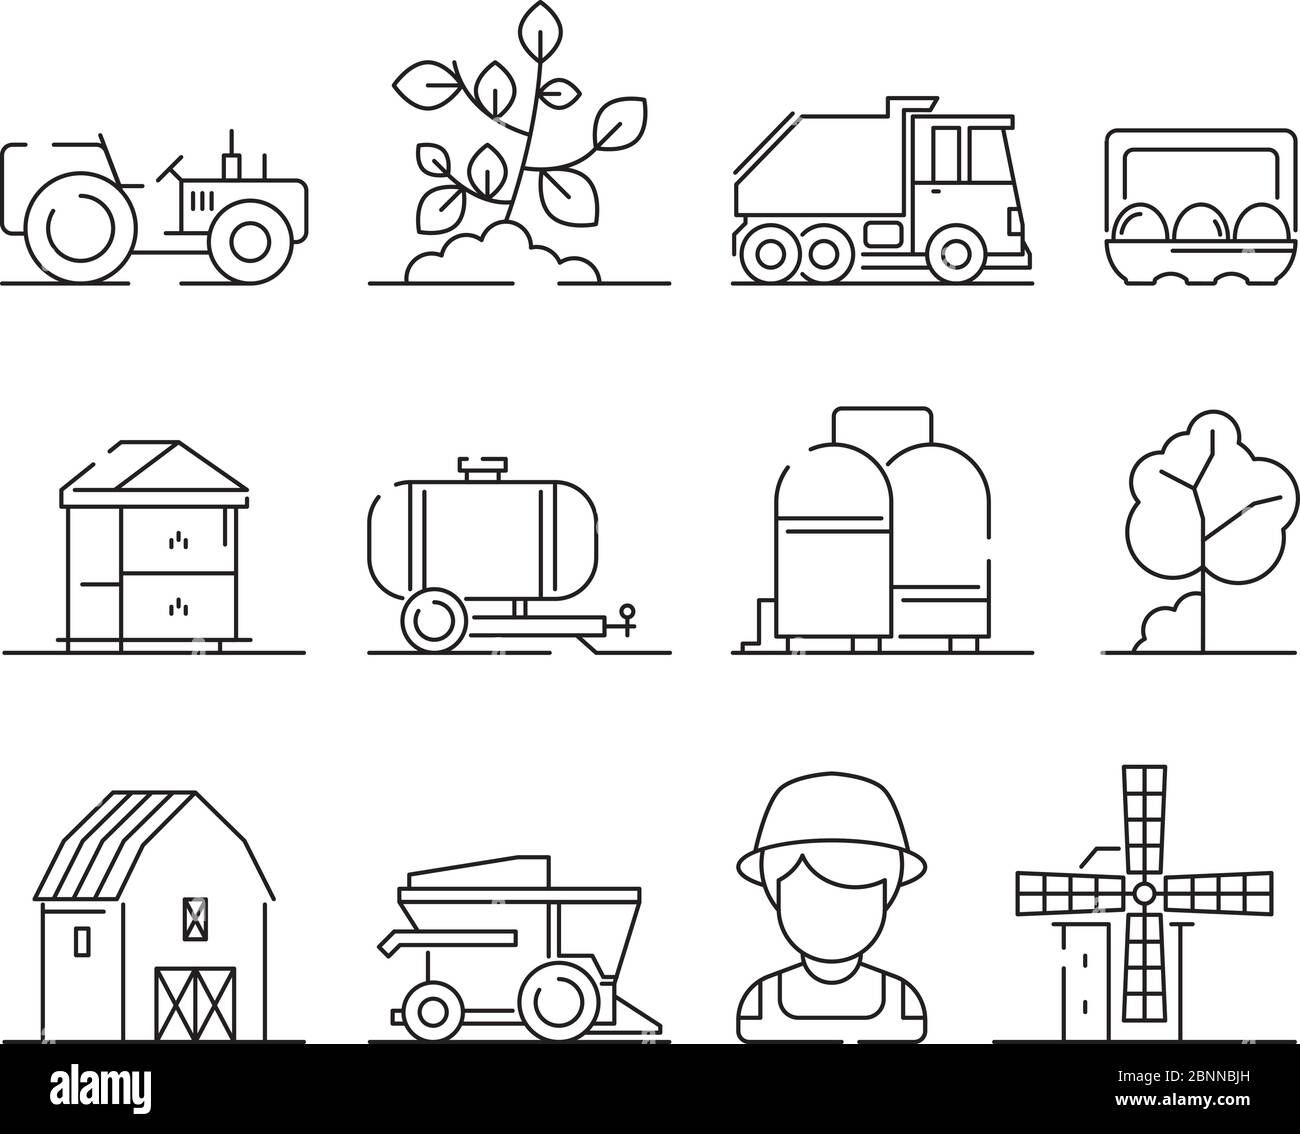 Agricultural icon. Industrial farming machine village nature field farm landscape and buildings vector symbols Stock Vector